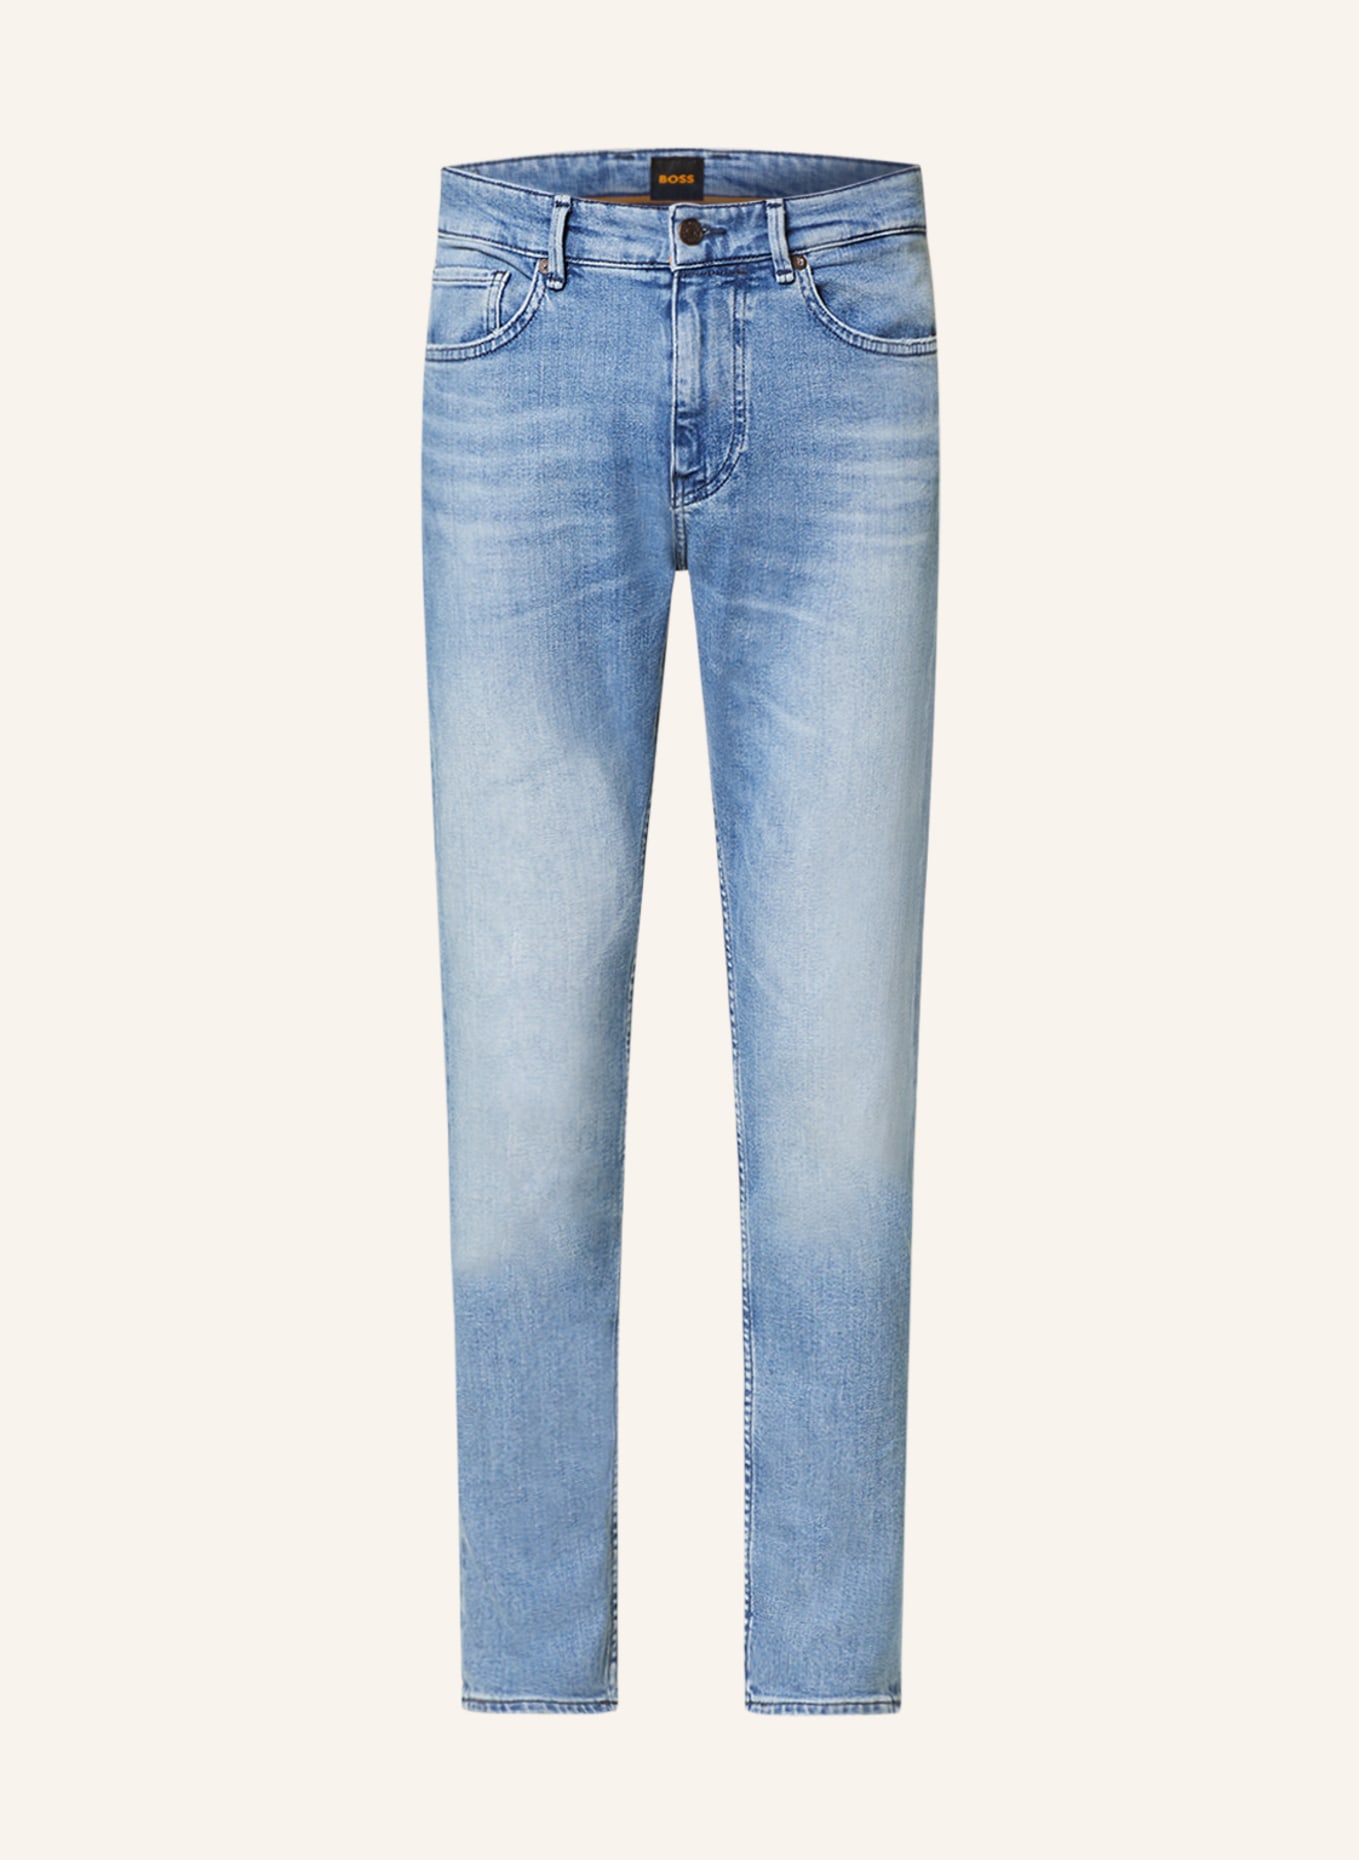 BOSS Jeans DELANO BC-C Slim Fit, Farbe: 440 TURQUOISE/AQUA (Bild 1)